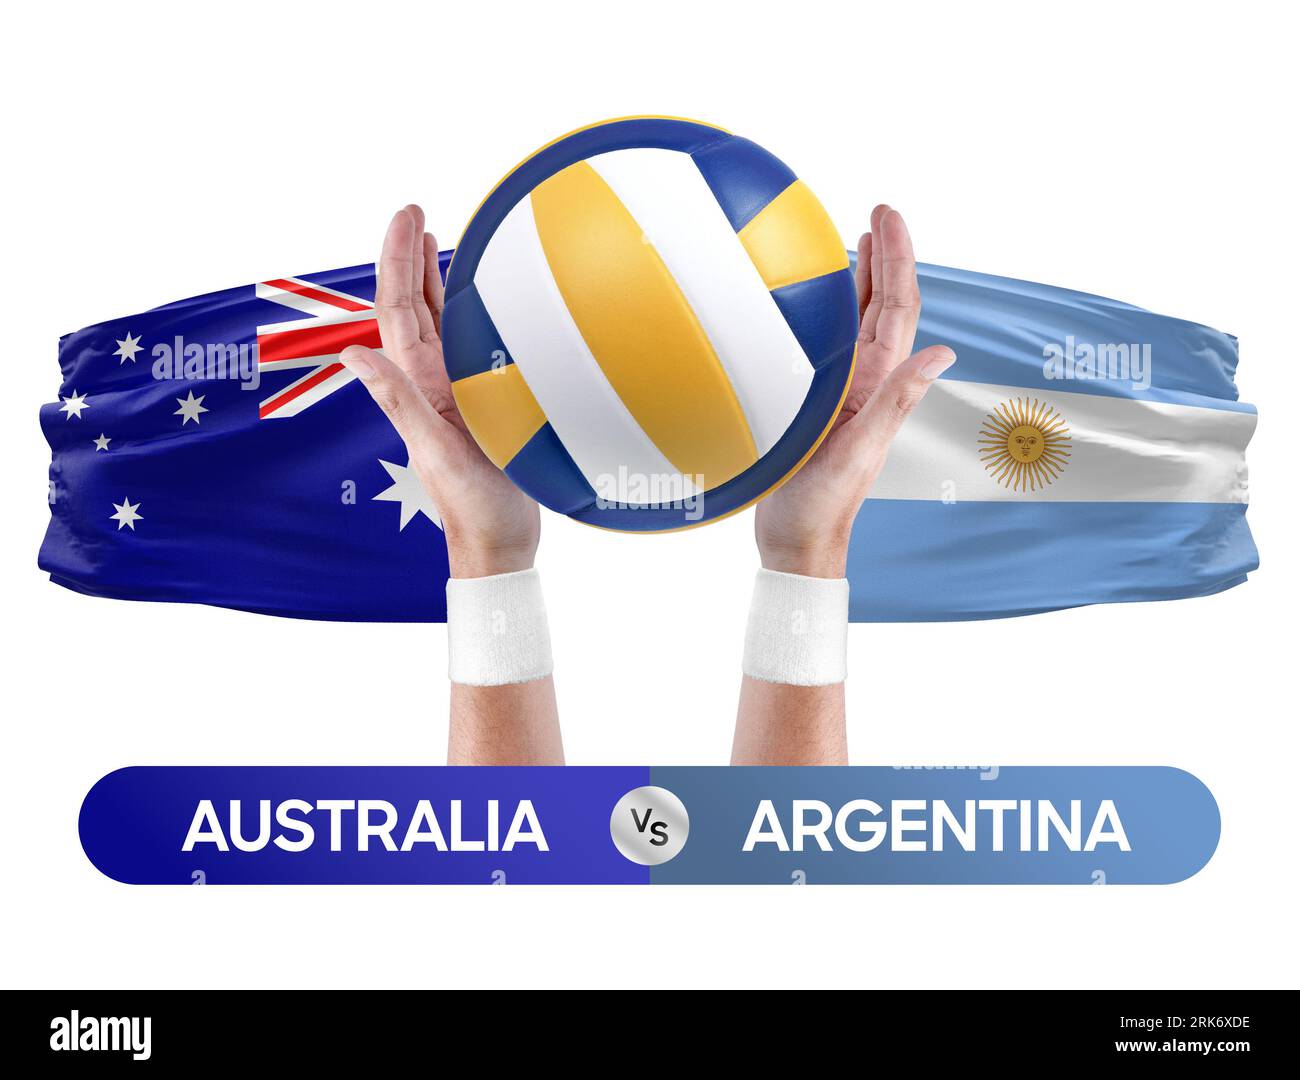 Australien gegen Argentinien Nationalmannschaften Volleyball Volleyball Volleyball Match Competition Concept. Stockfoto